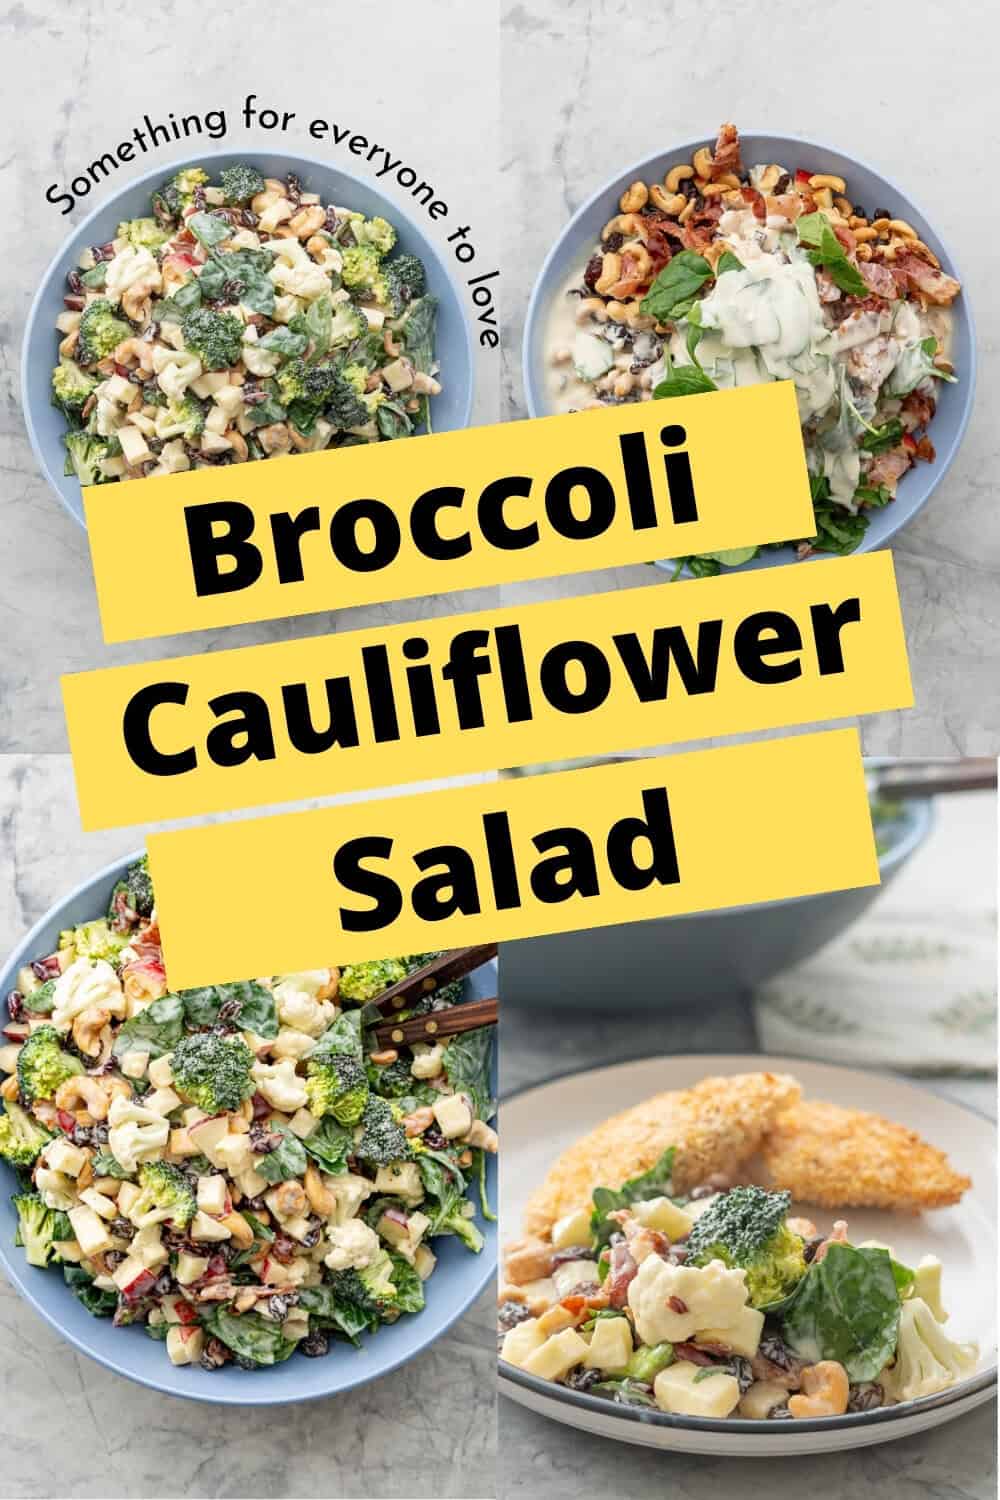 Broccoli and Cauliflower Salad - My Kids Lick The Bowl